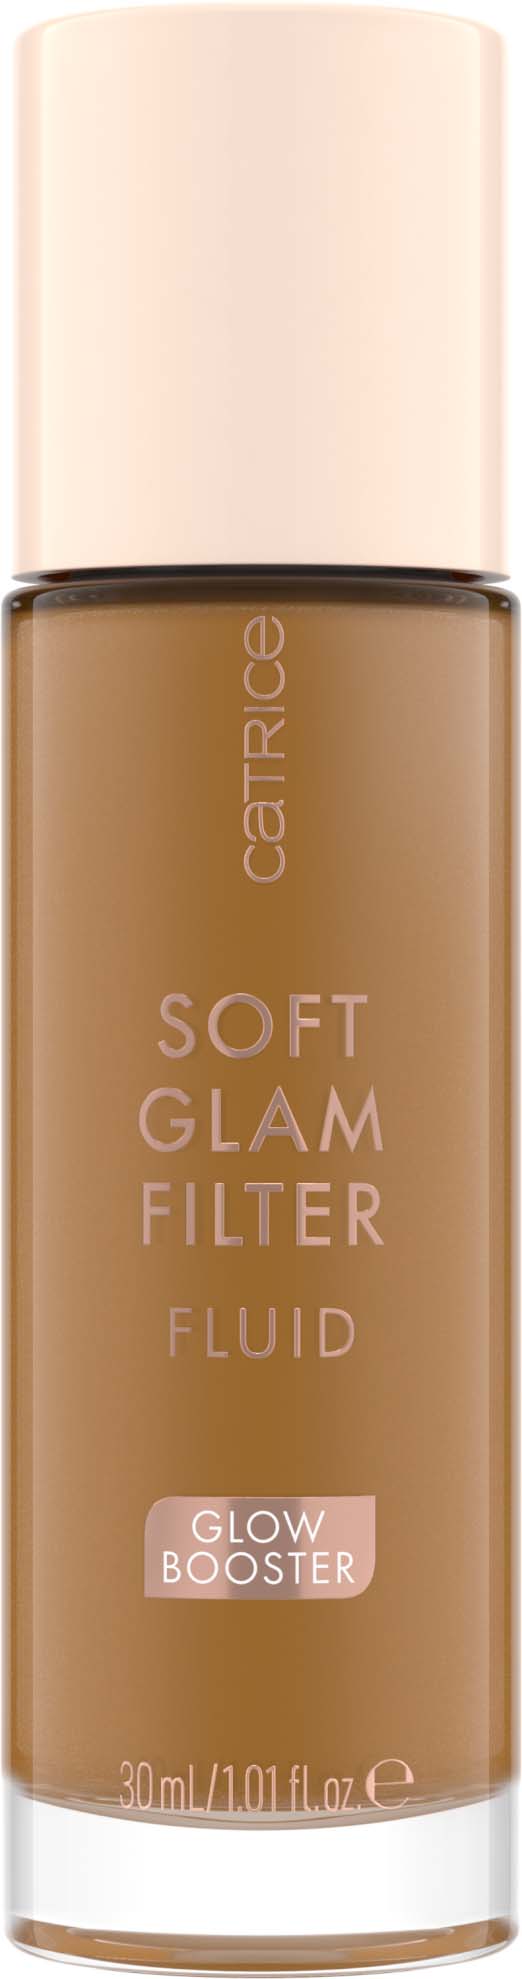 Fluid Tan-Deep Catrice Glam Soft 080 Filter